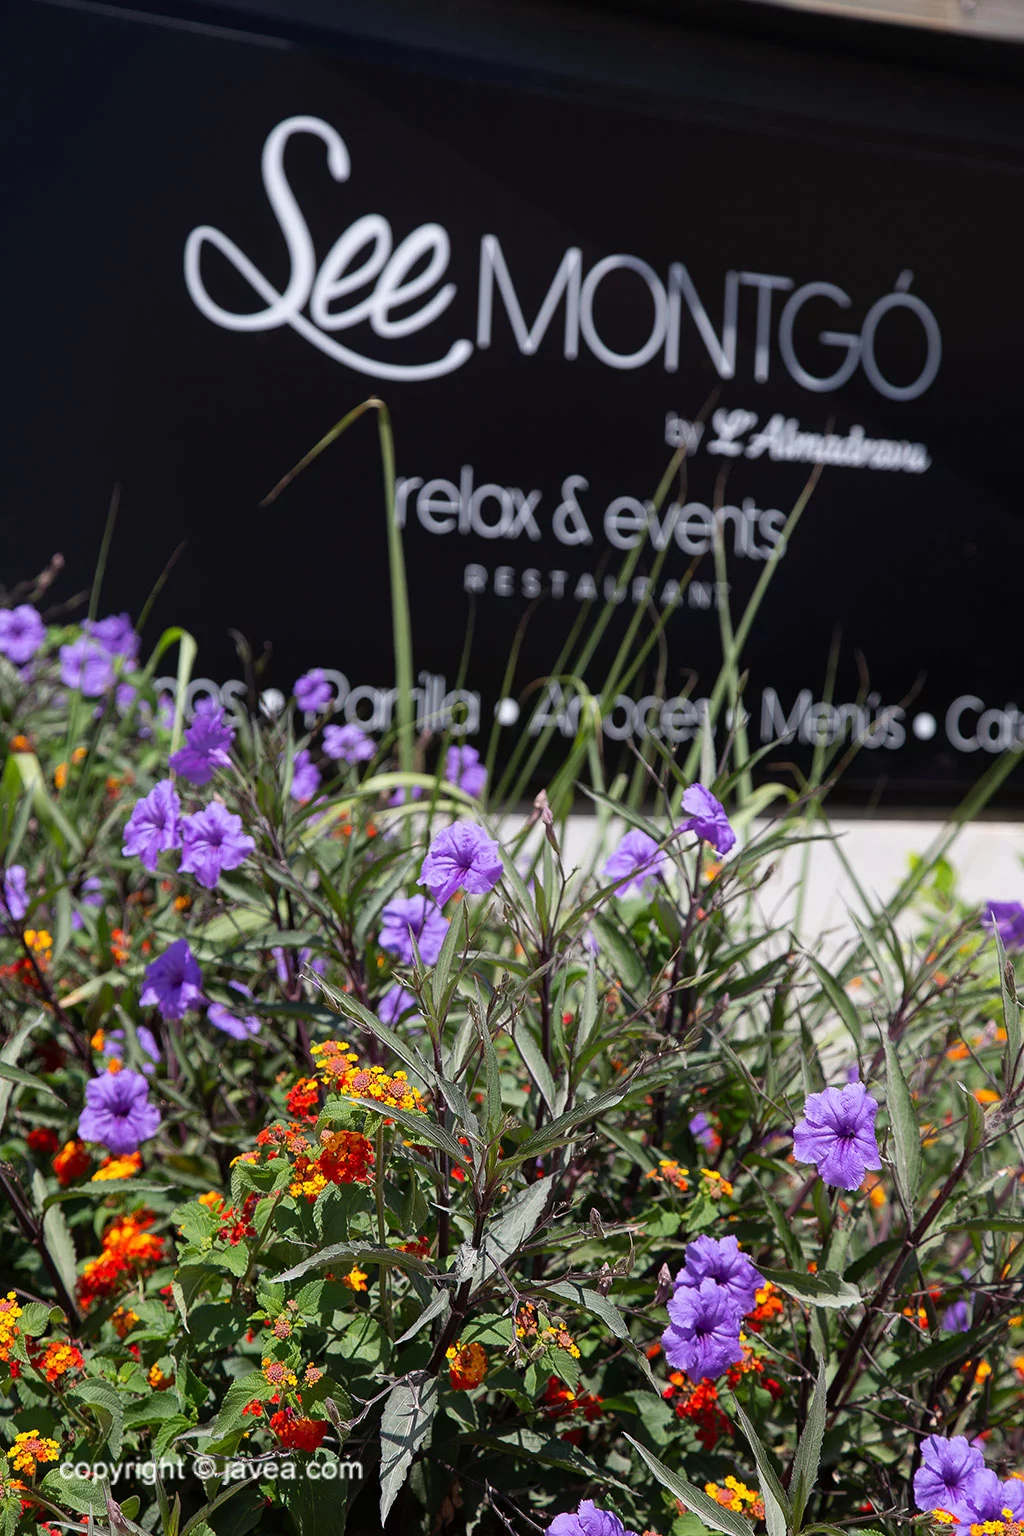 Cartel entrada Relax & Events – Restaurante SeeMontgó